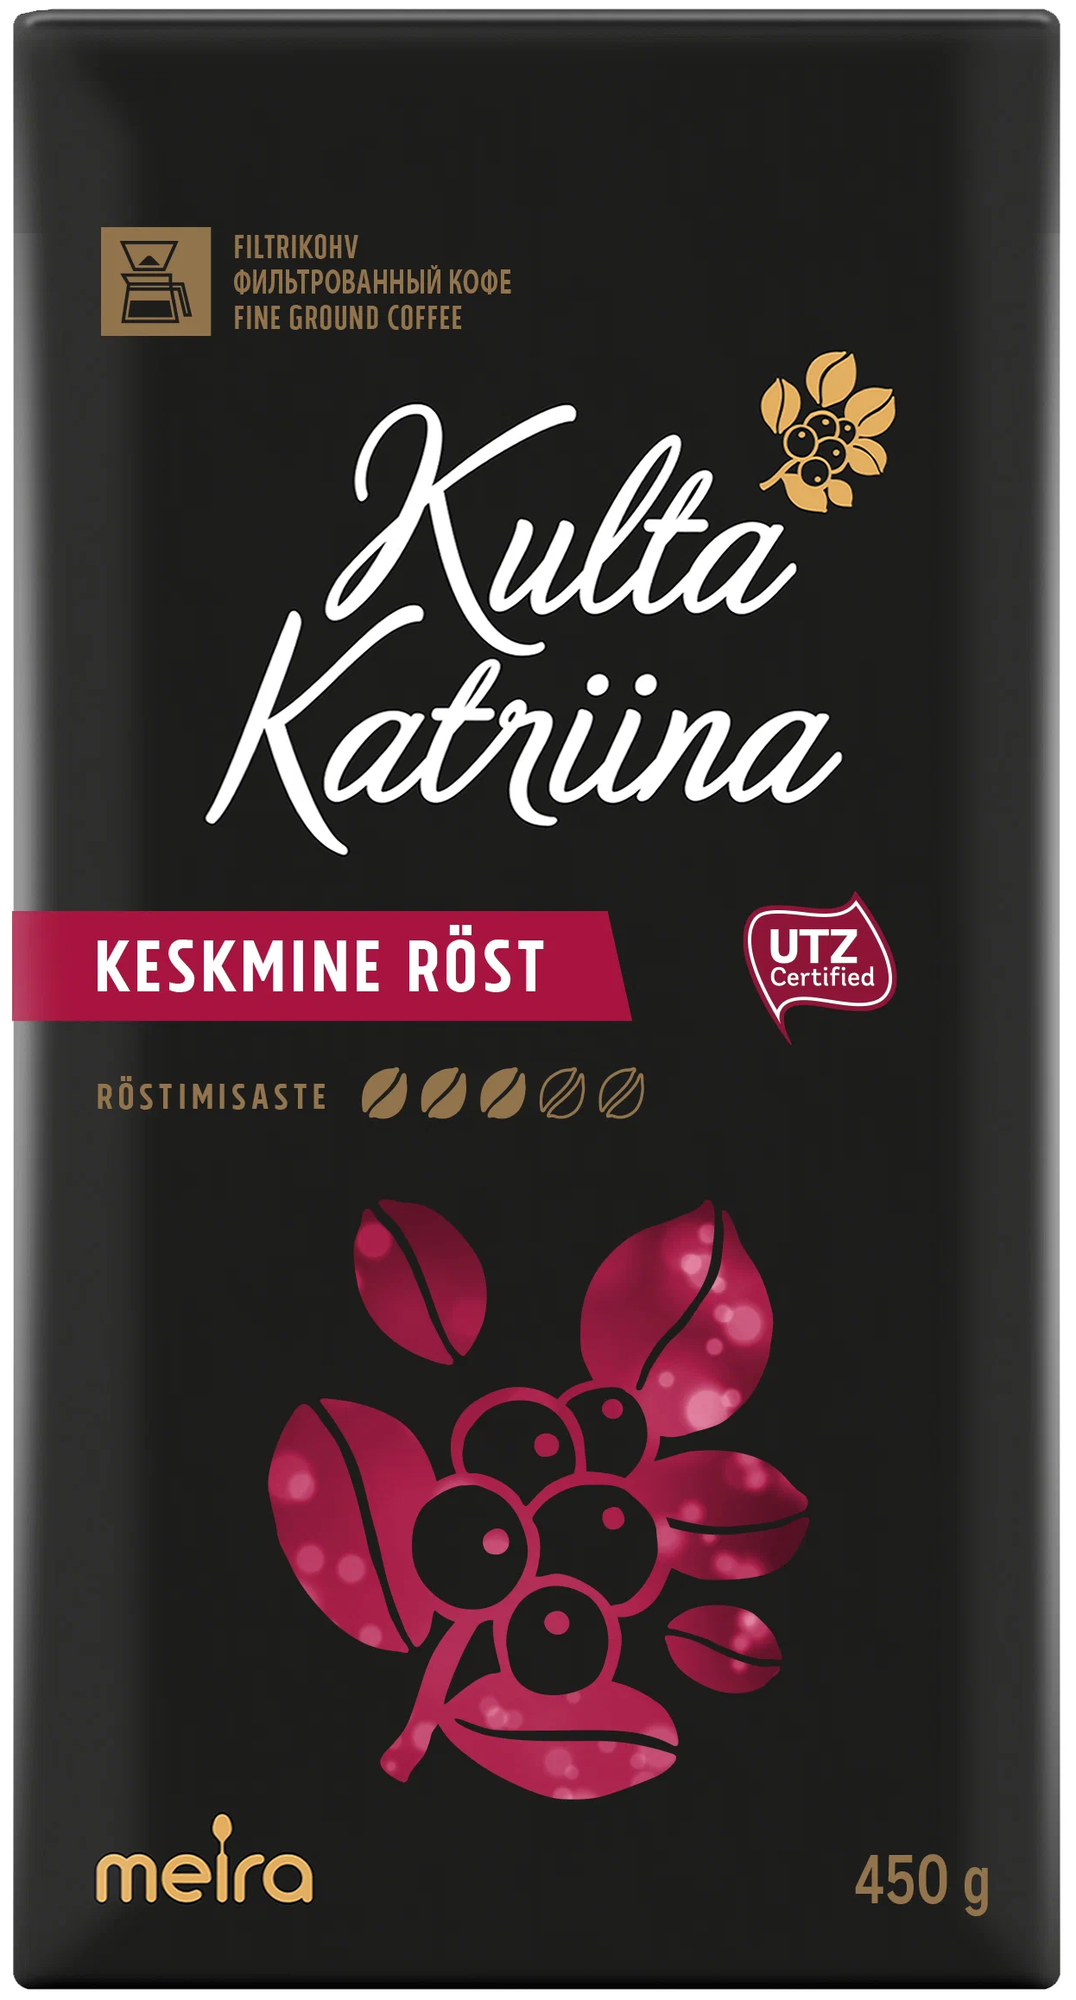 Кофе молотый Kulta Katriina Keskmine rost, 450 г, вакуумная упаковка